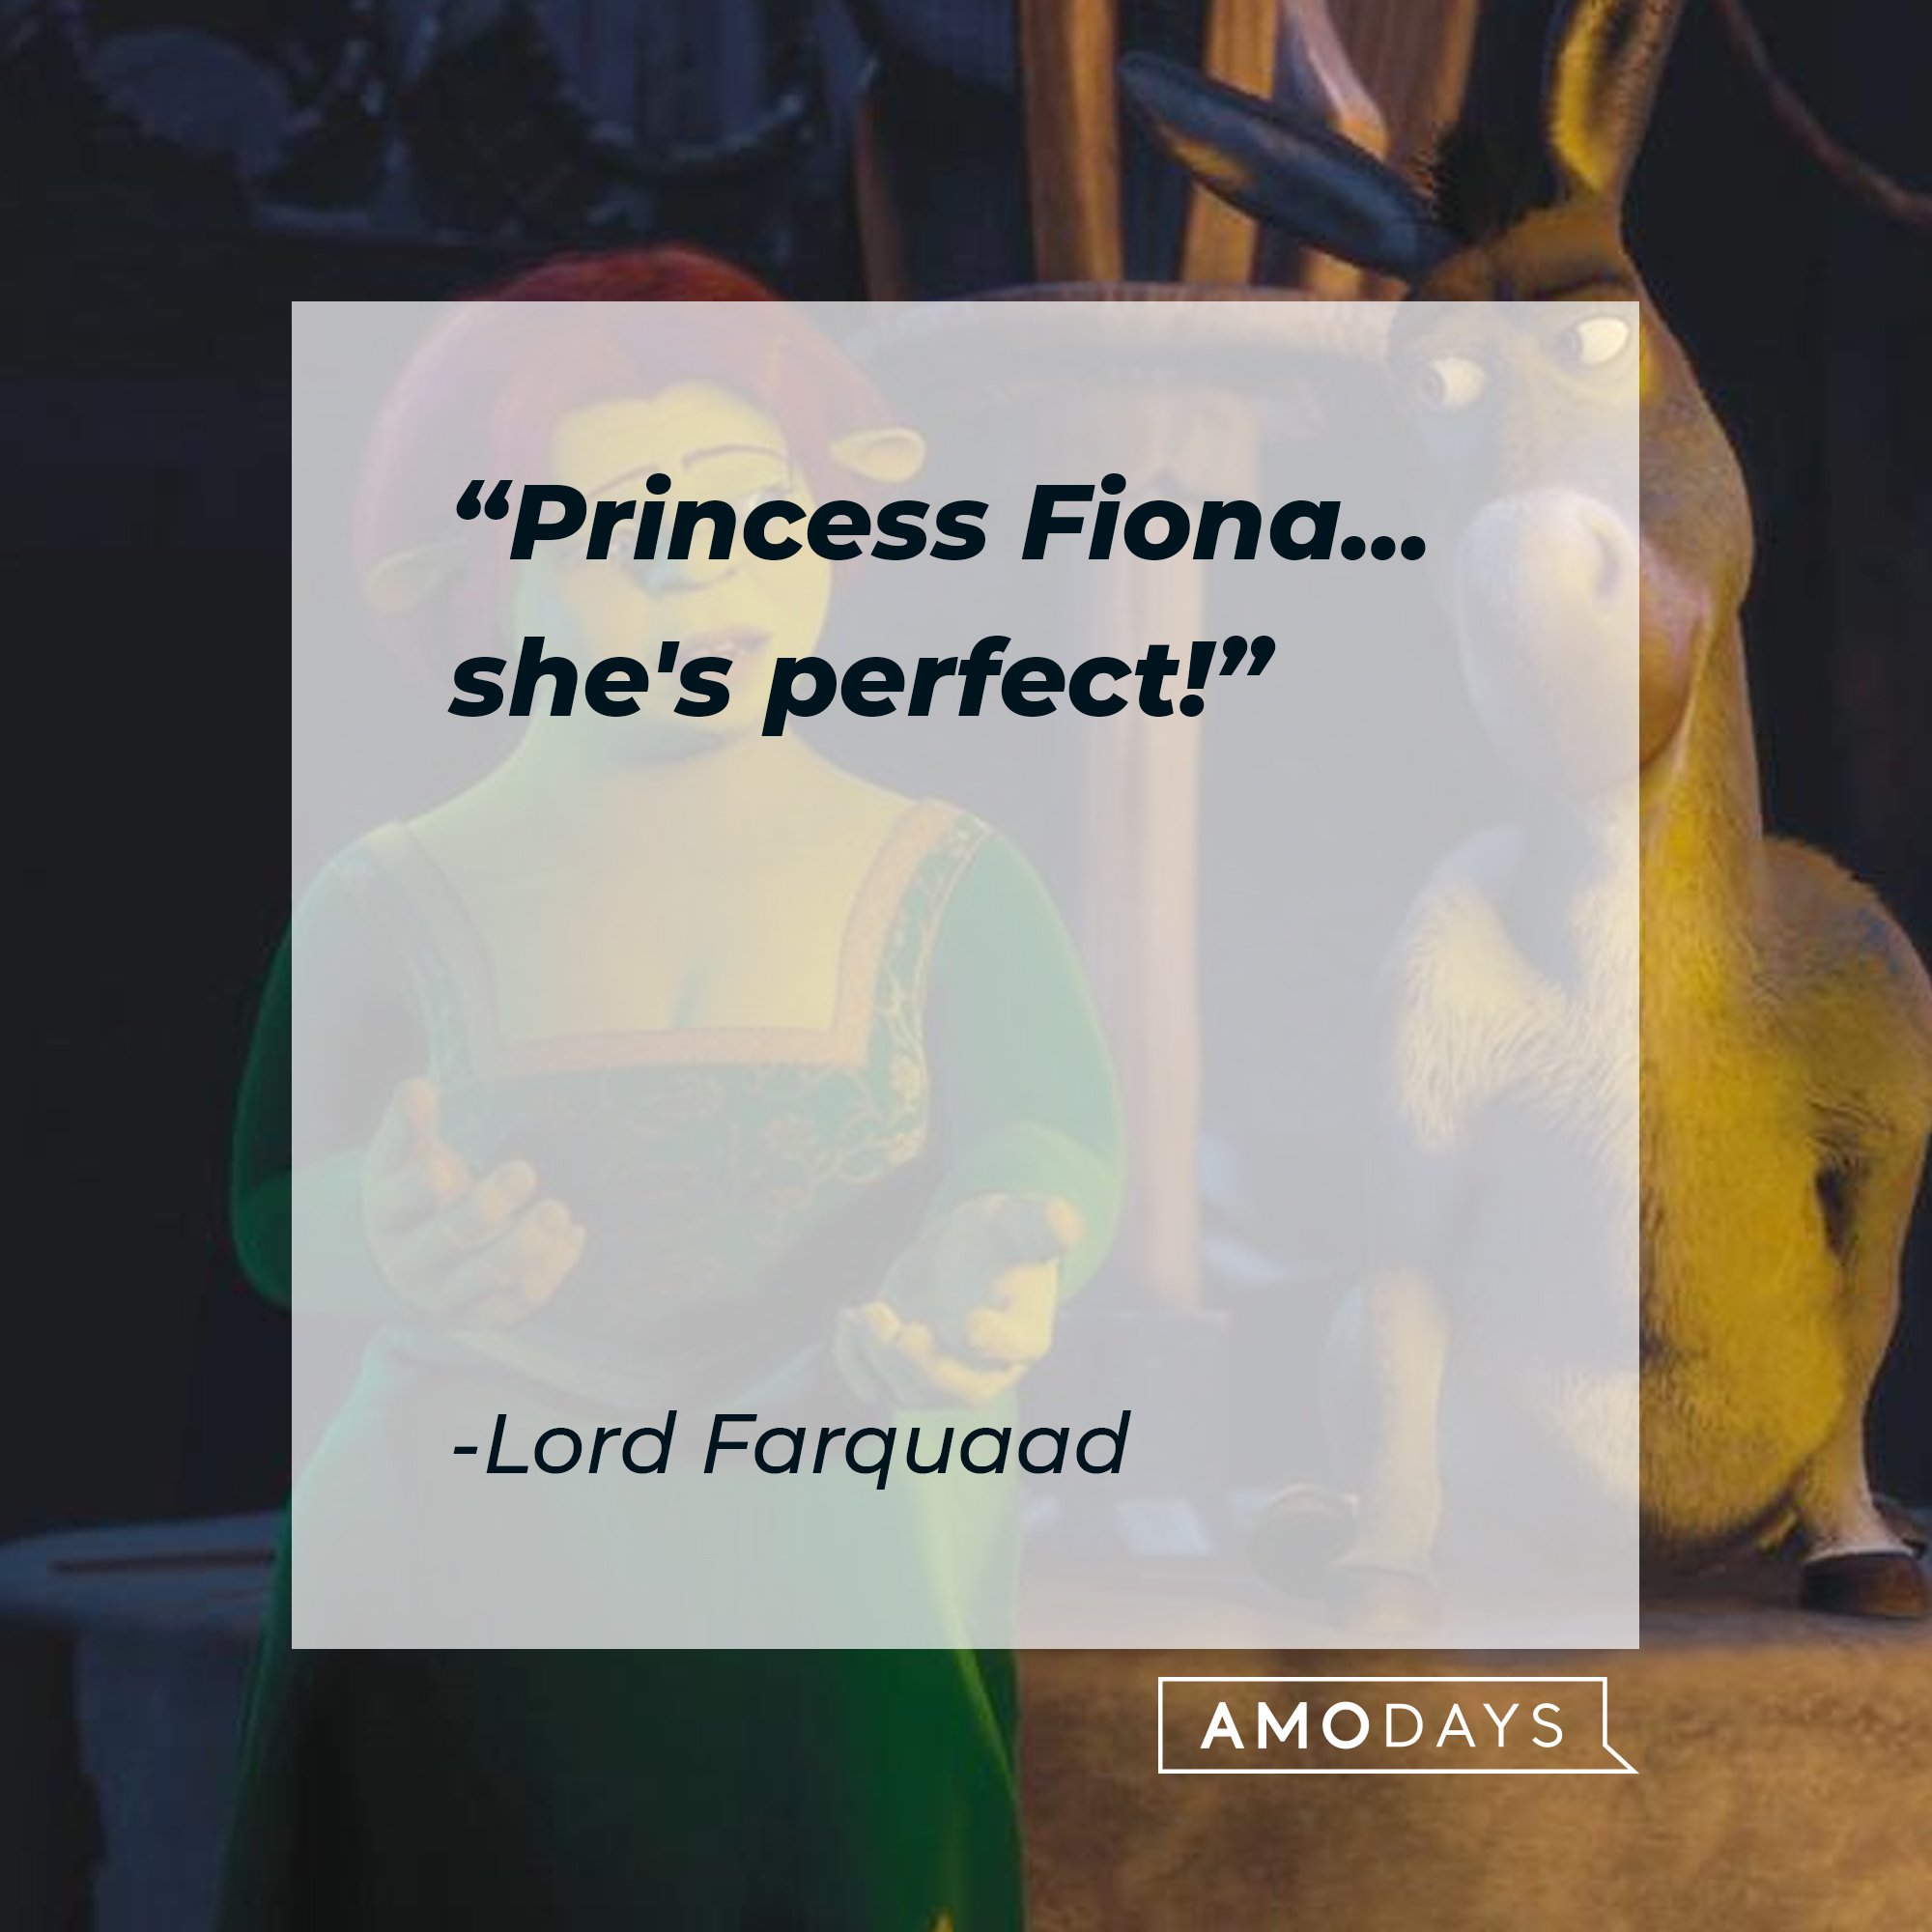 Lord Farquaad's quote: "Princess Fiona... she's perfect!" | Image: AmoDays 